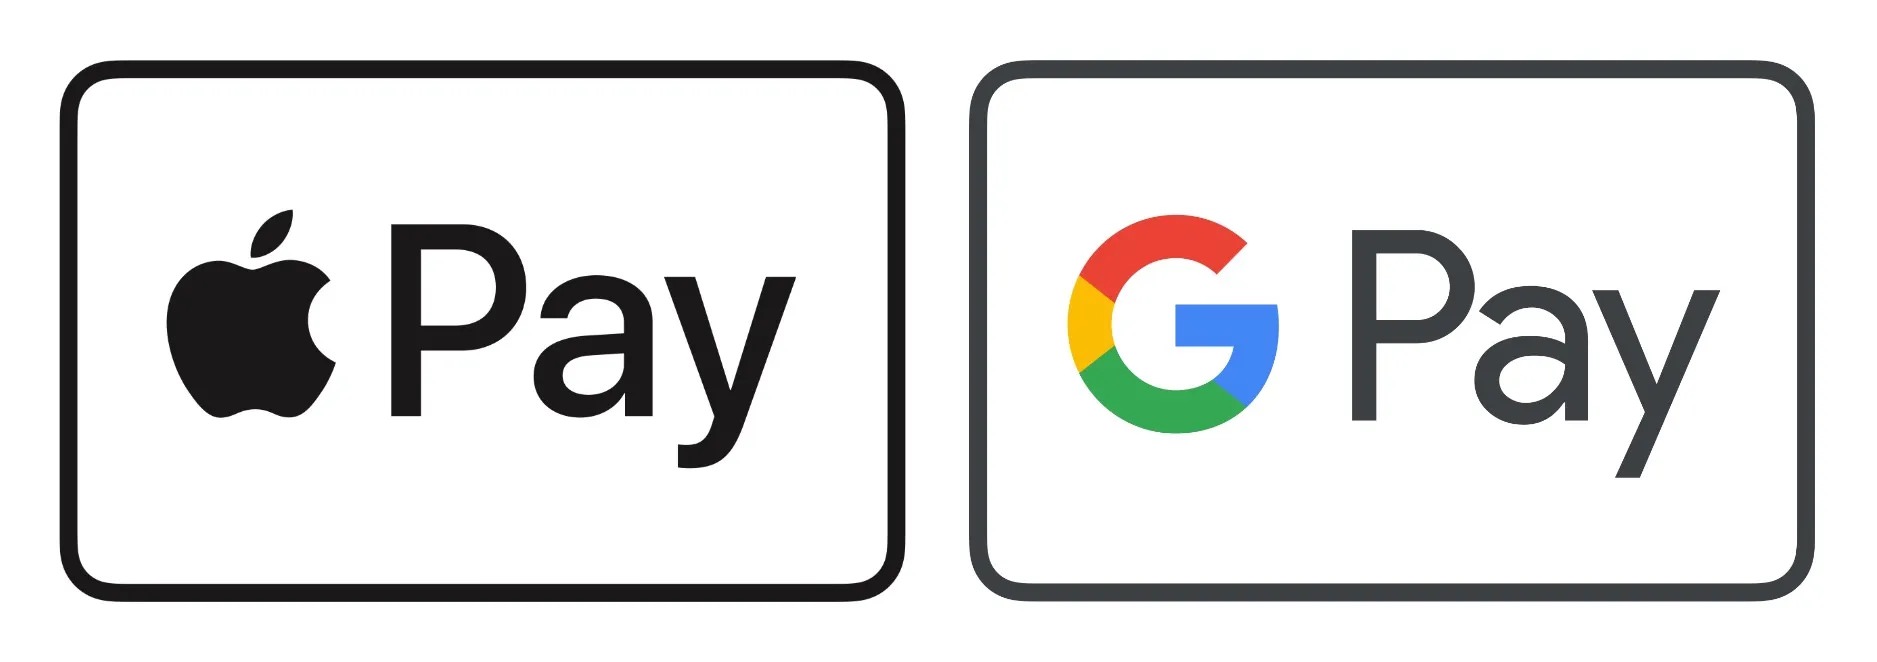 Apple Pay / Google Payで支払う